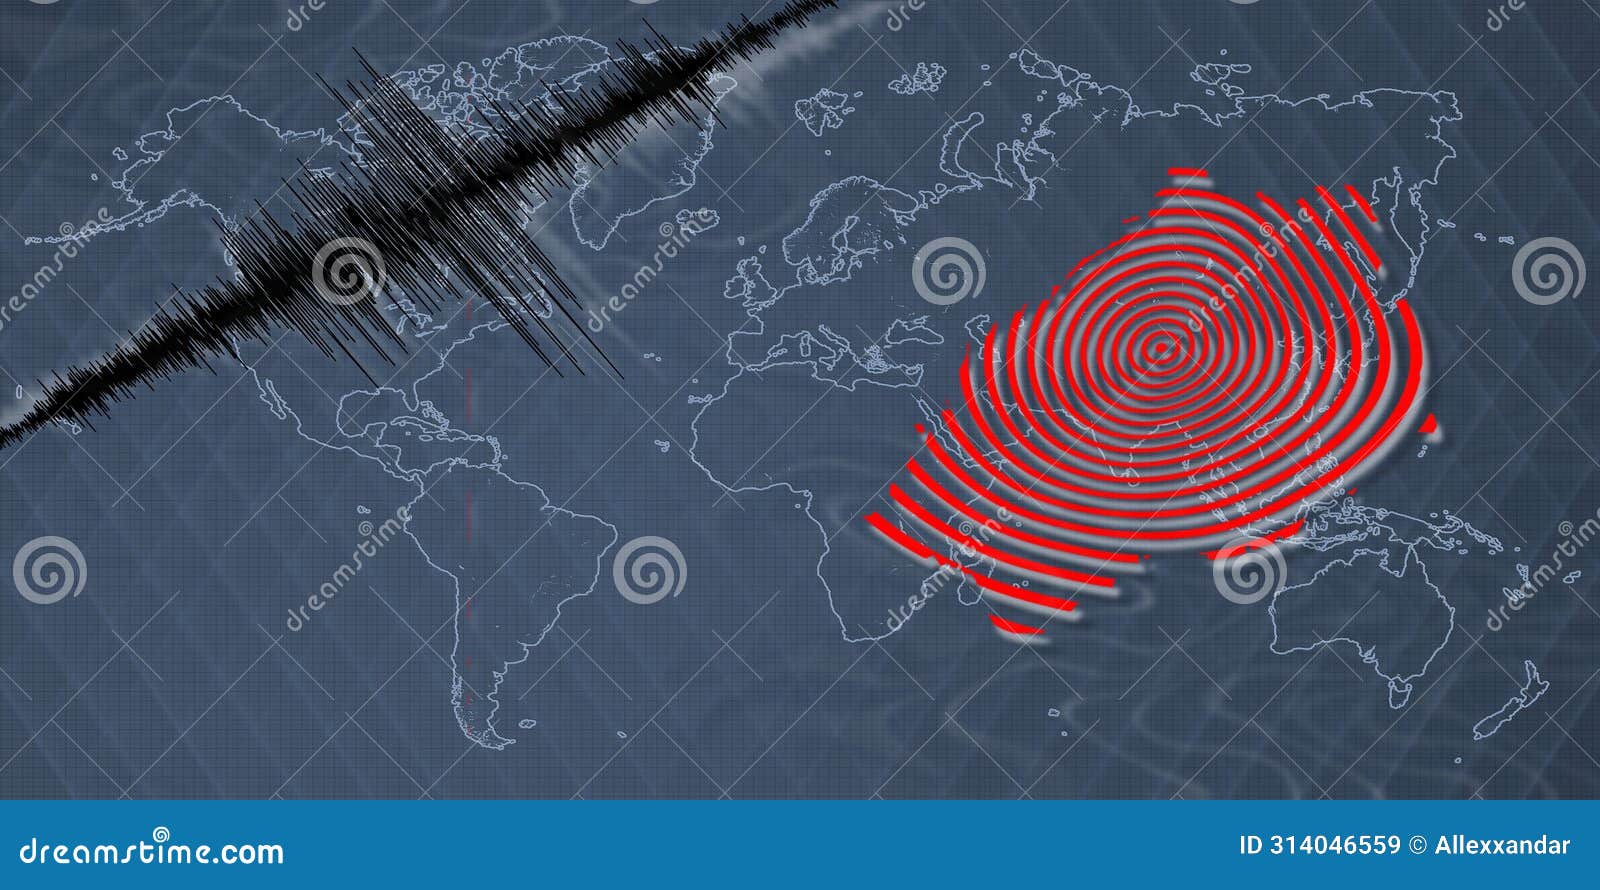 seismic activity earthquake saint helena map